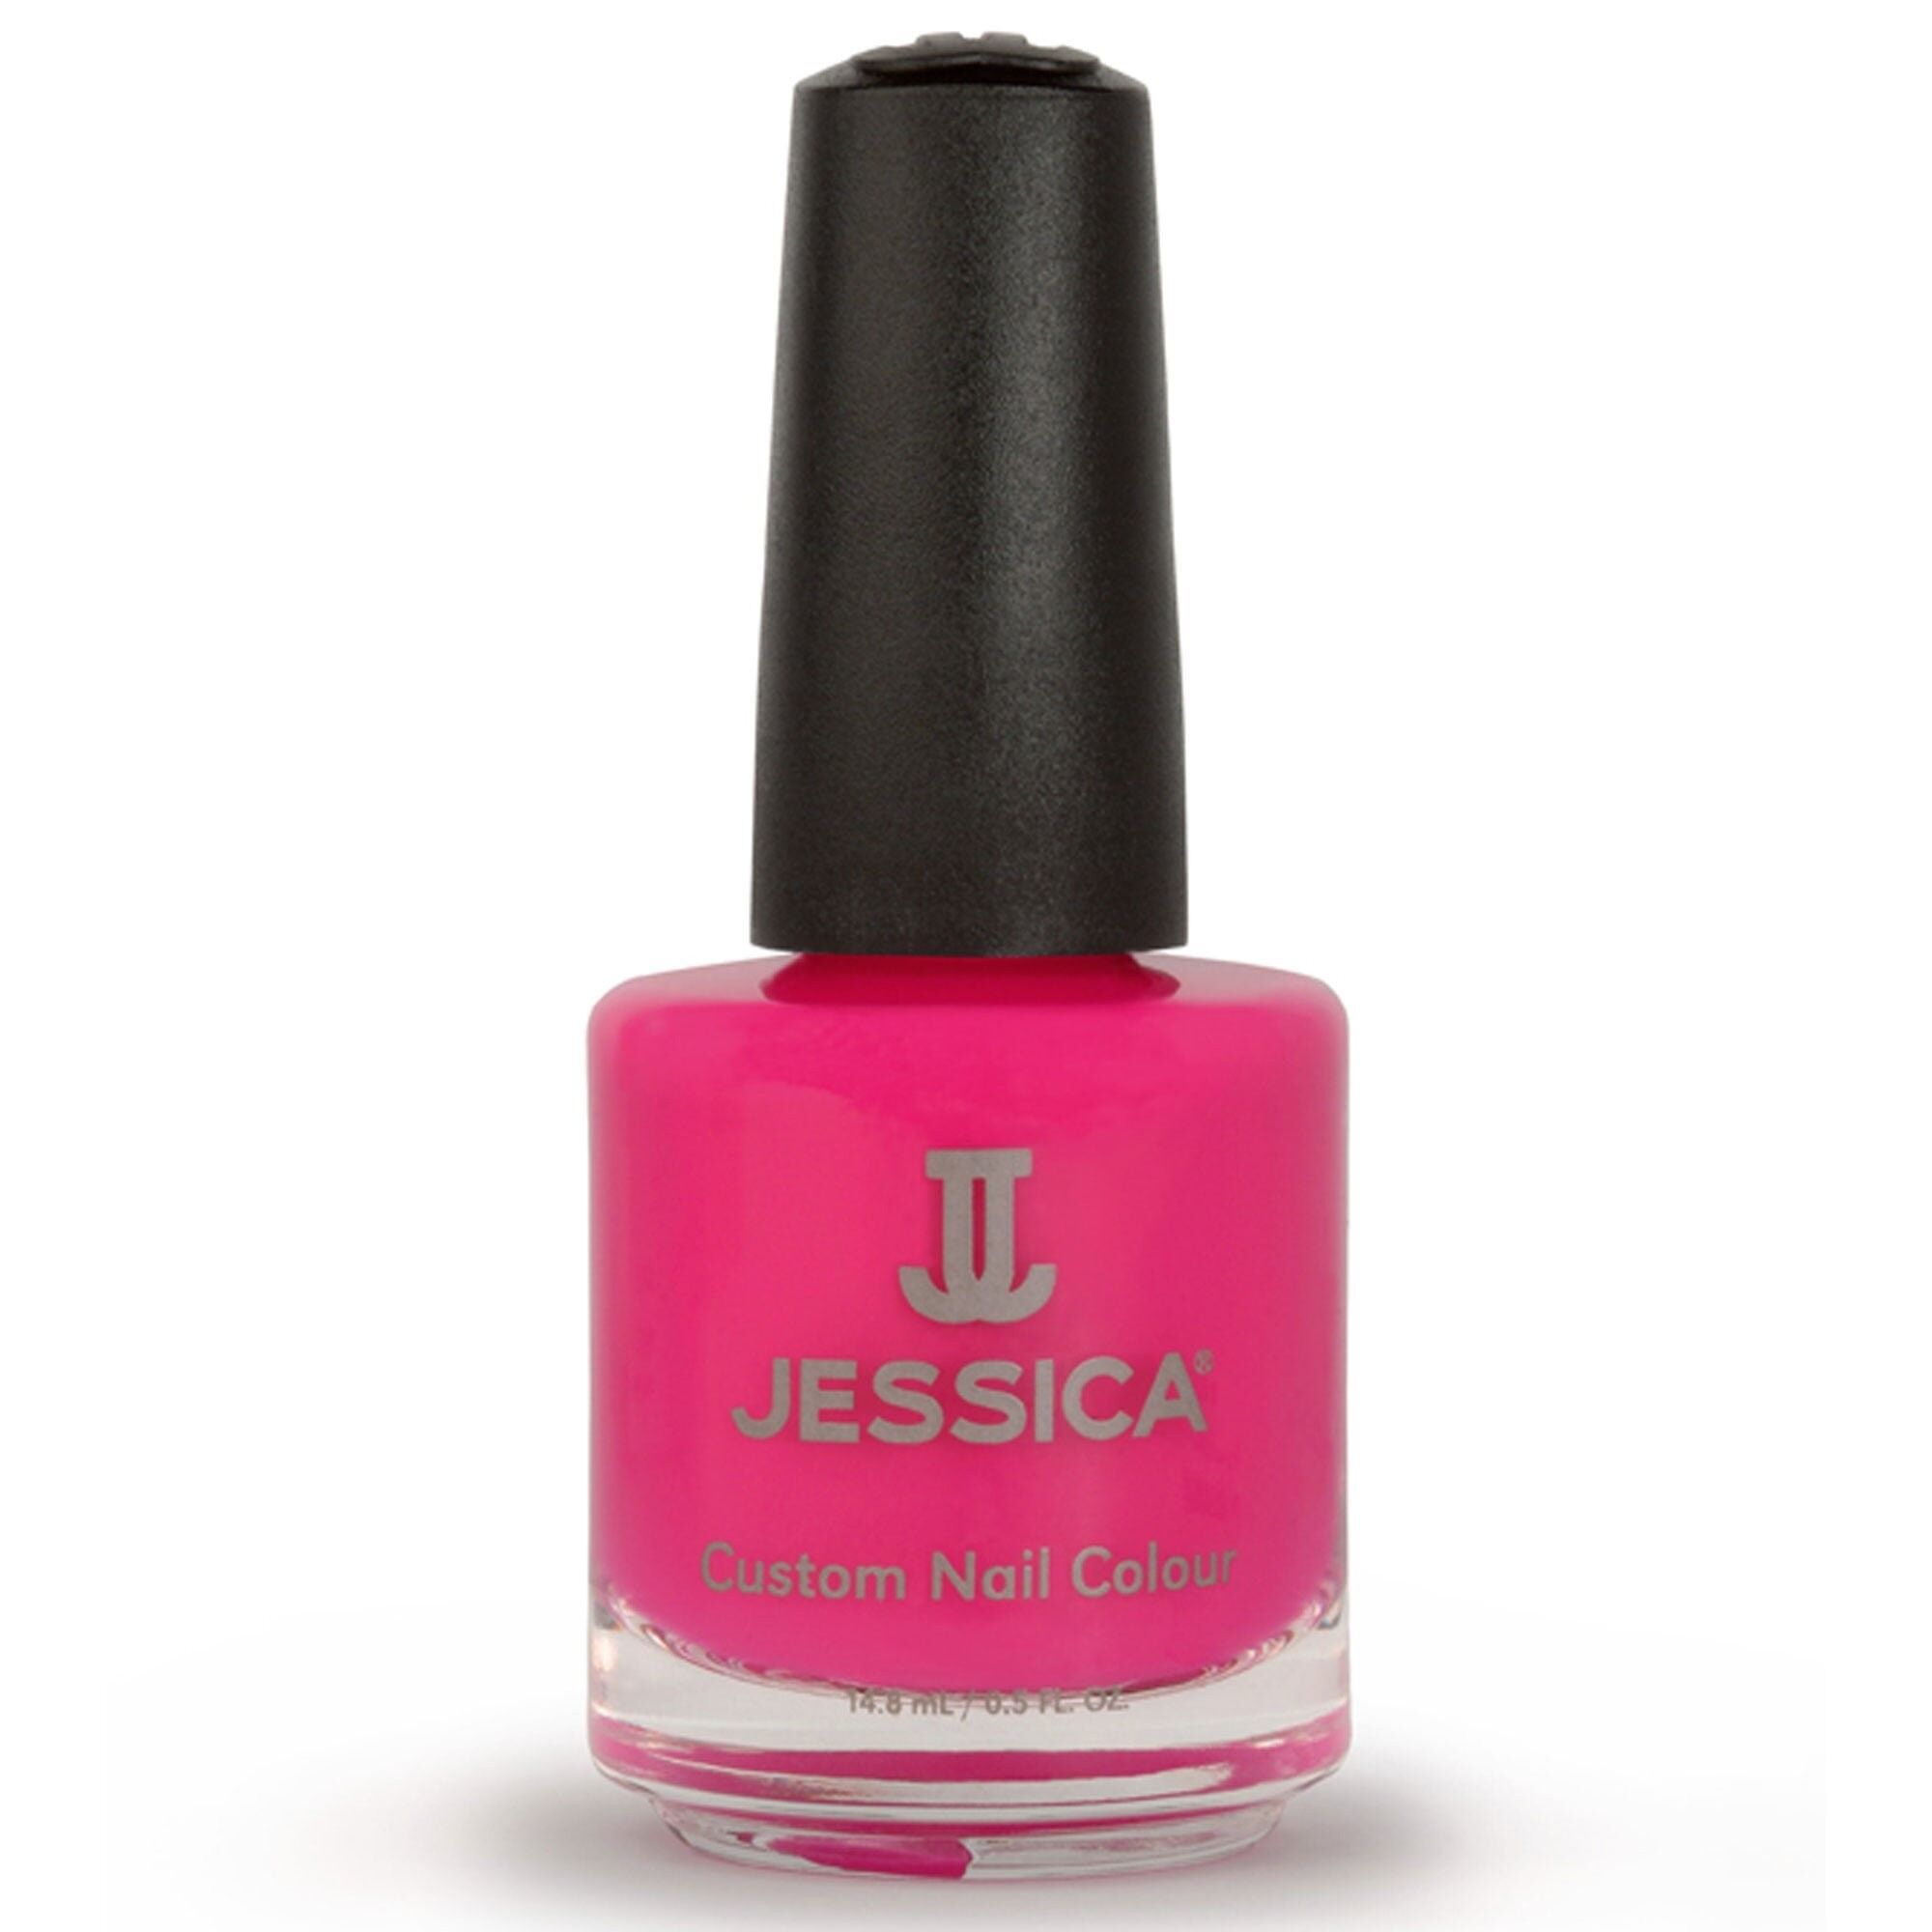 Jessica Cosmetics HQ (@jessicacosmetics) • Instagram photos and videos |  Jessica cosmetics, Nail care, Cosmetics